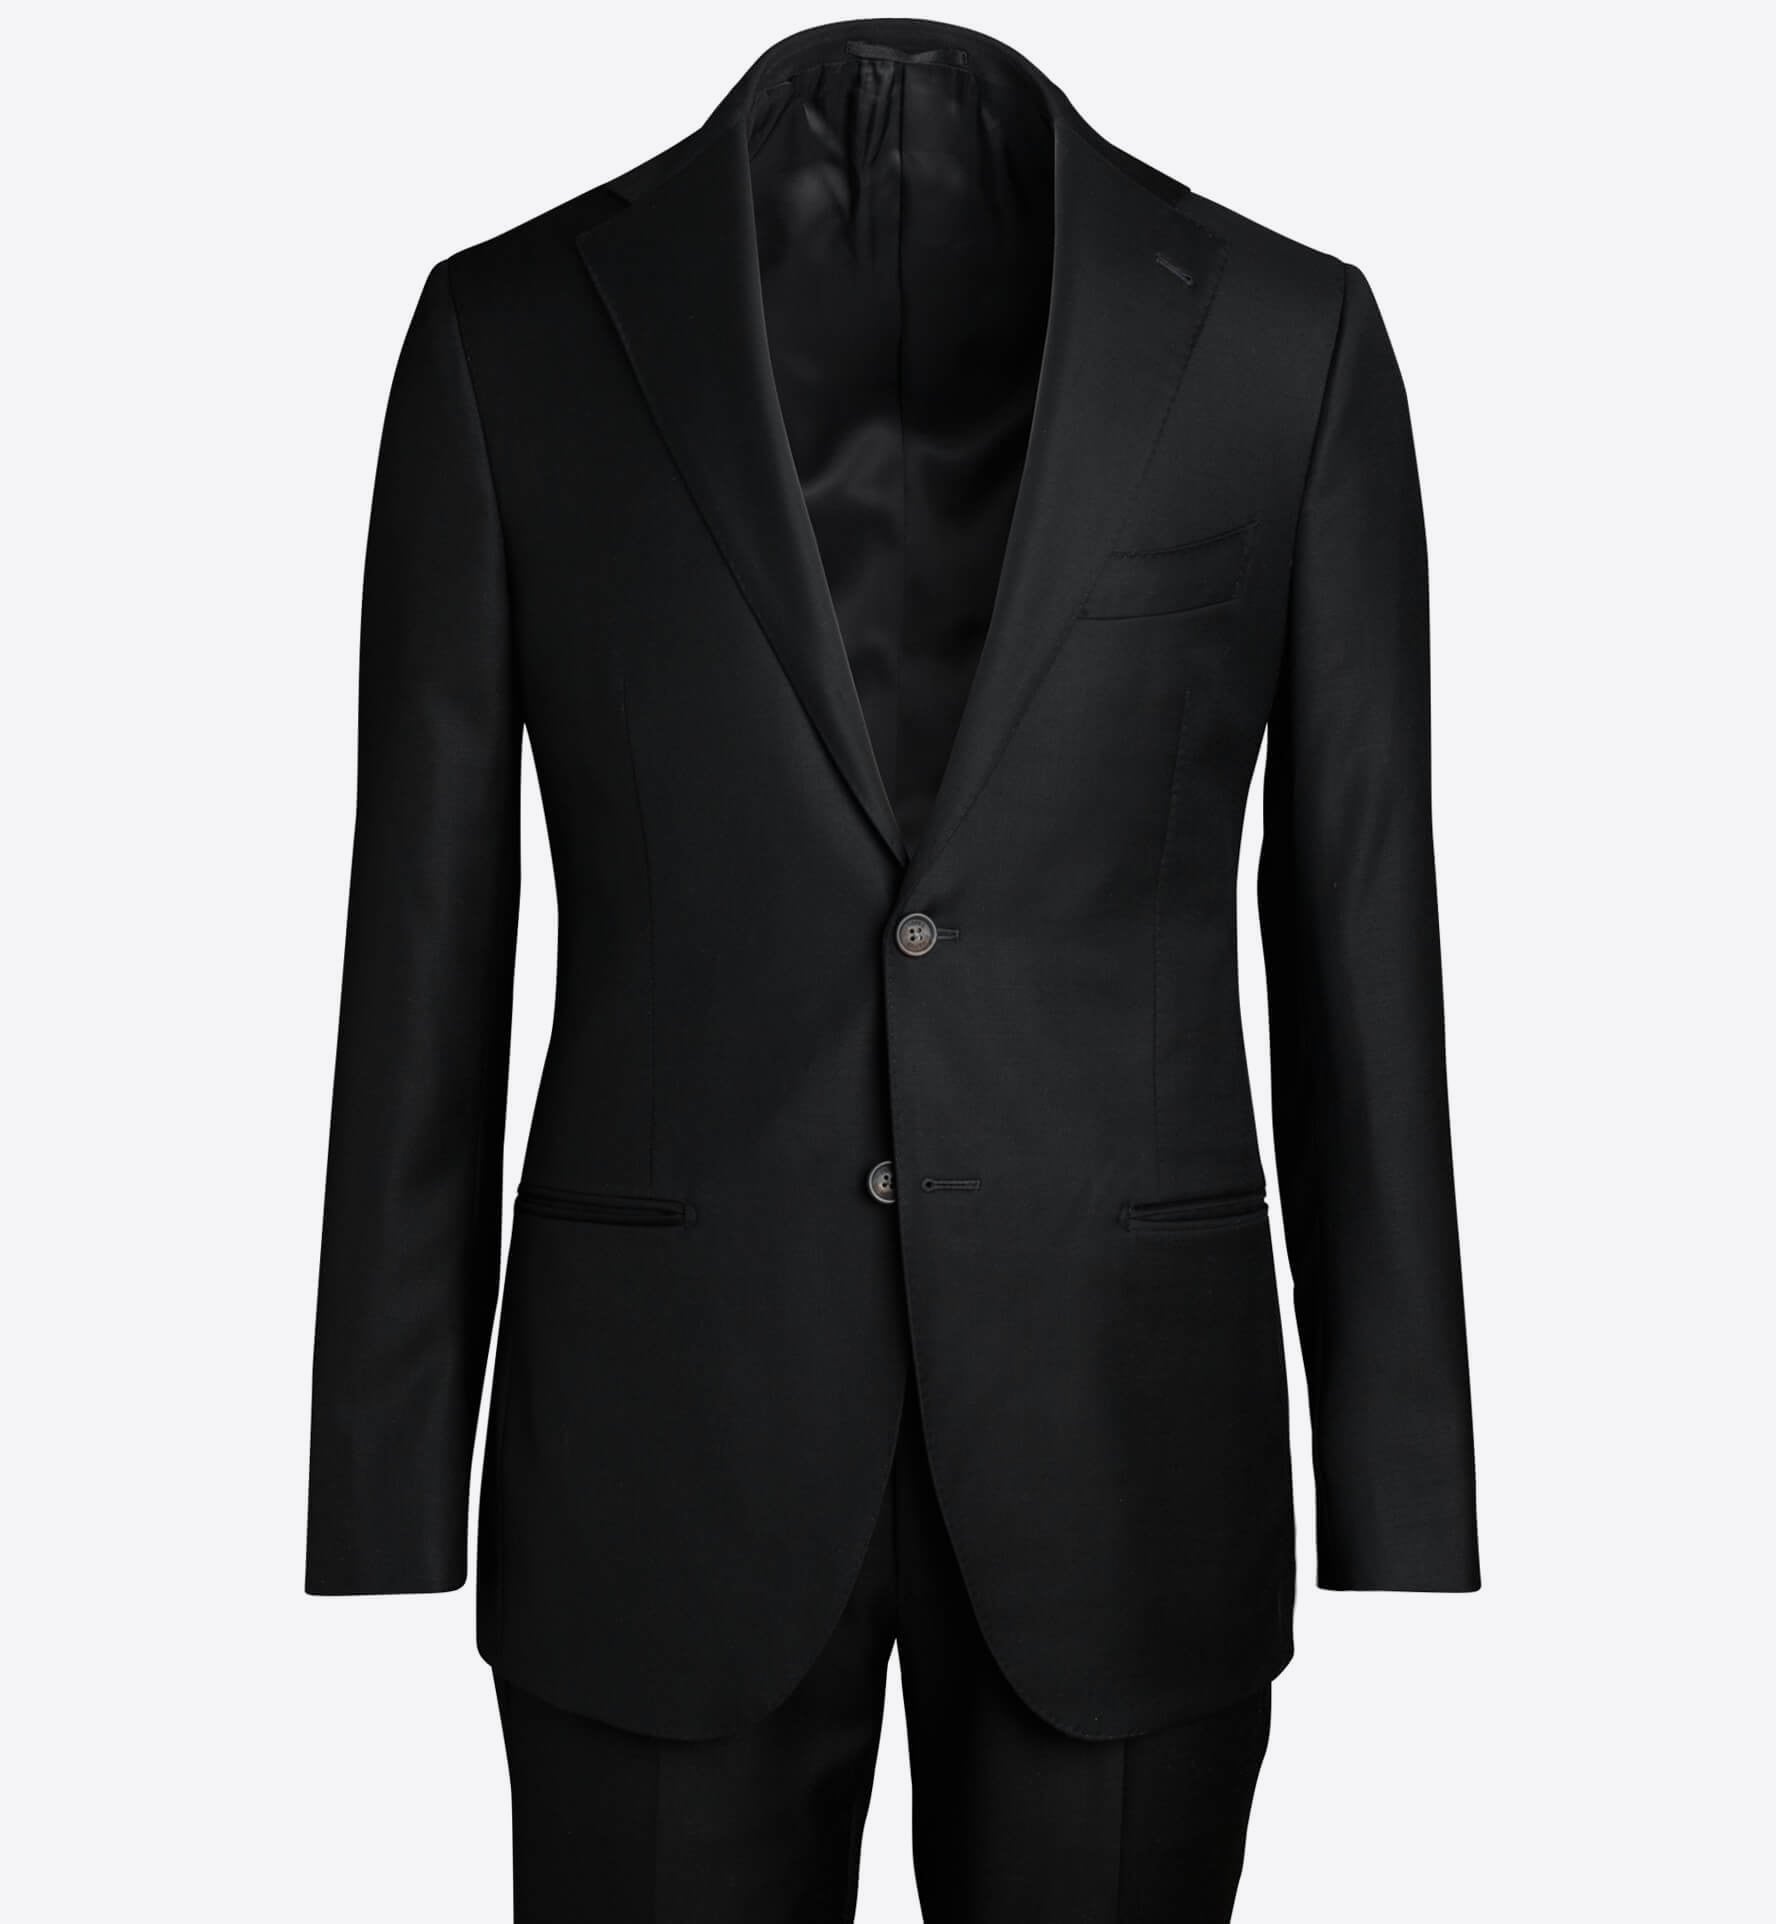 Allen Black Wool Suit - Custom Fit Tailored Clothing